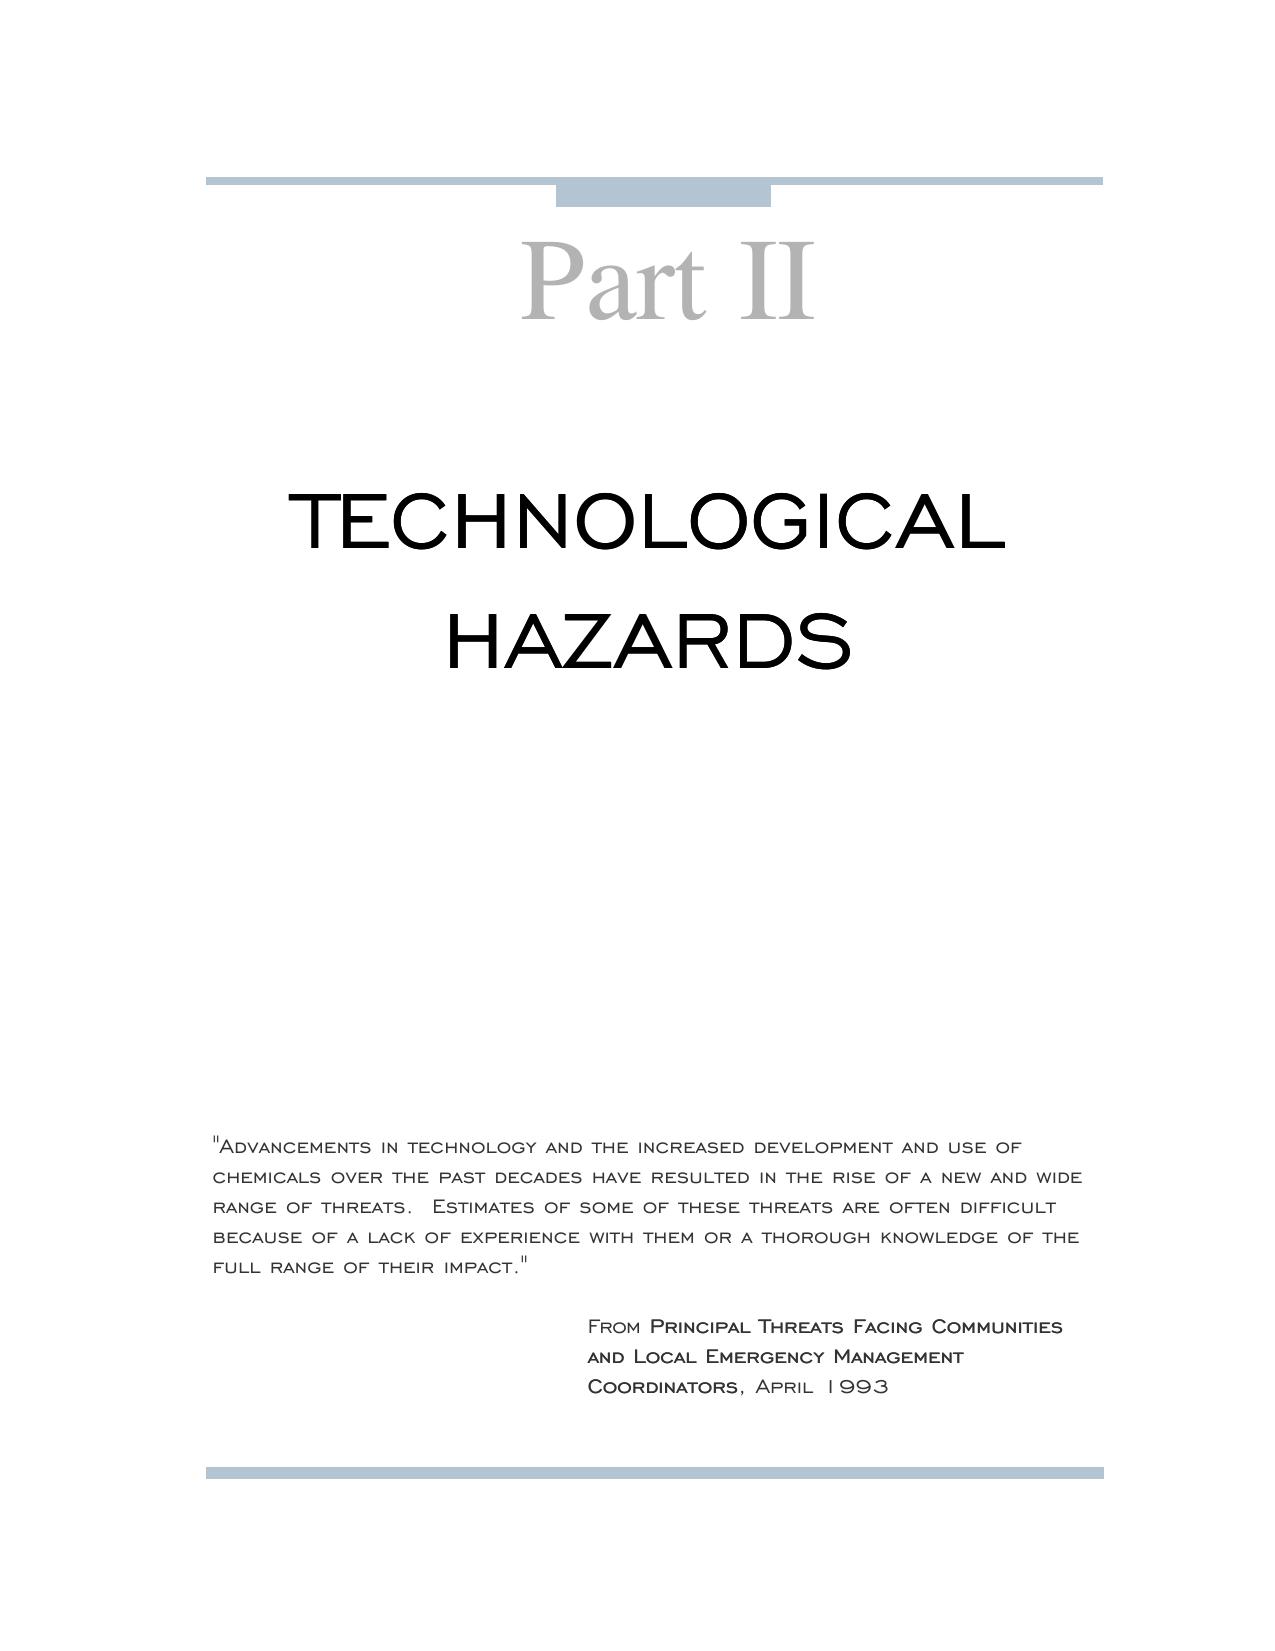 Technological Hazards